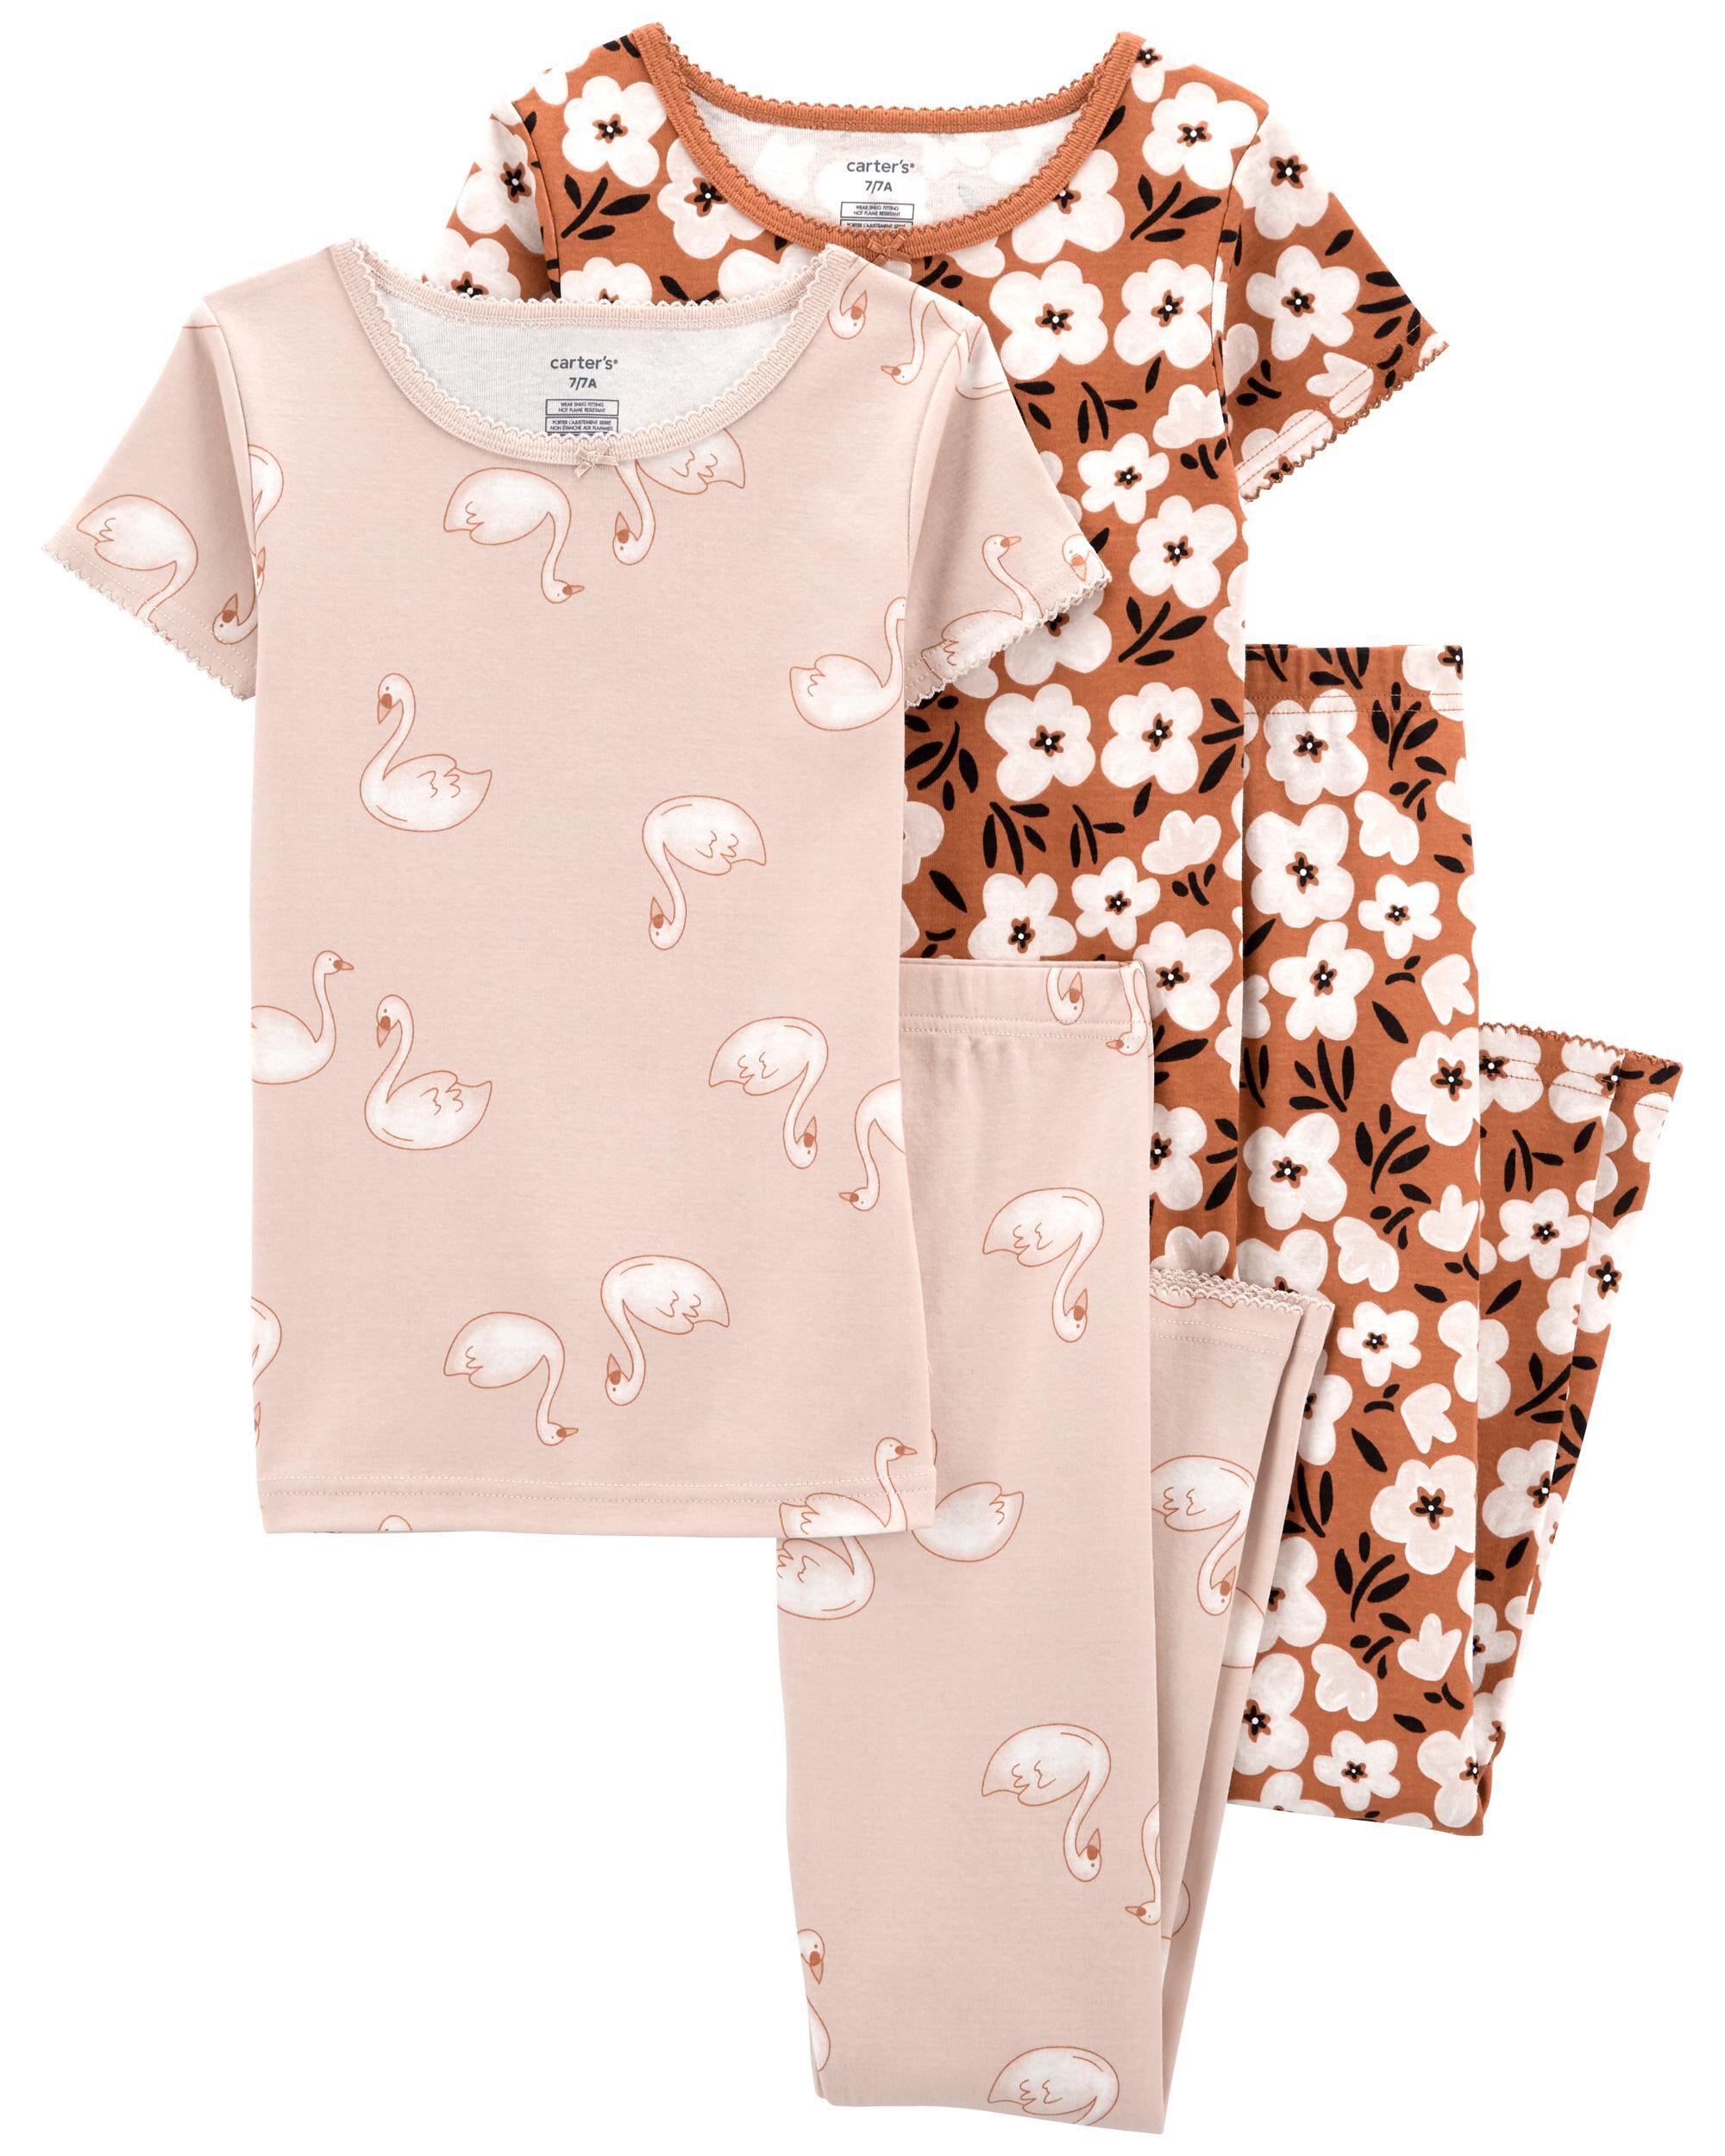 NWT Girls Carter's 4-Piece Cotton Pajama Set assorted prints & sizes 